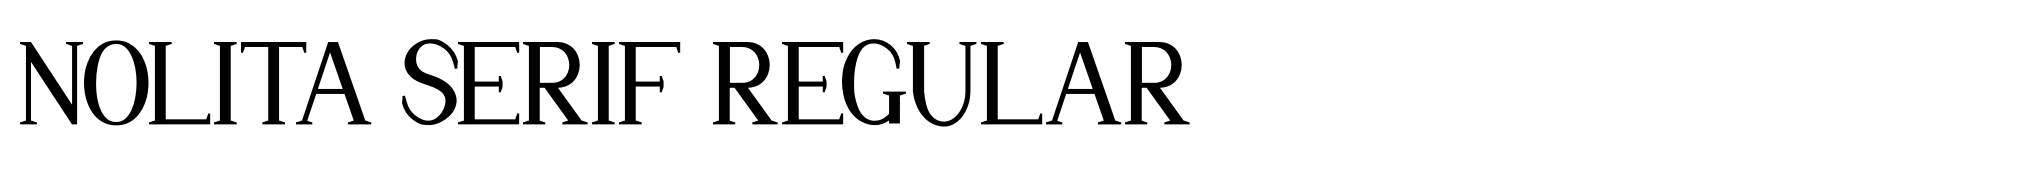 Nolita Serif Regular image